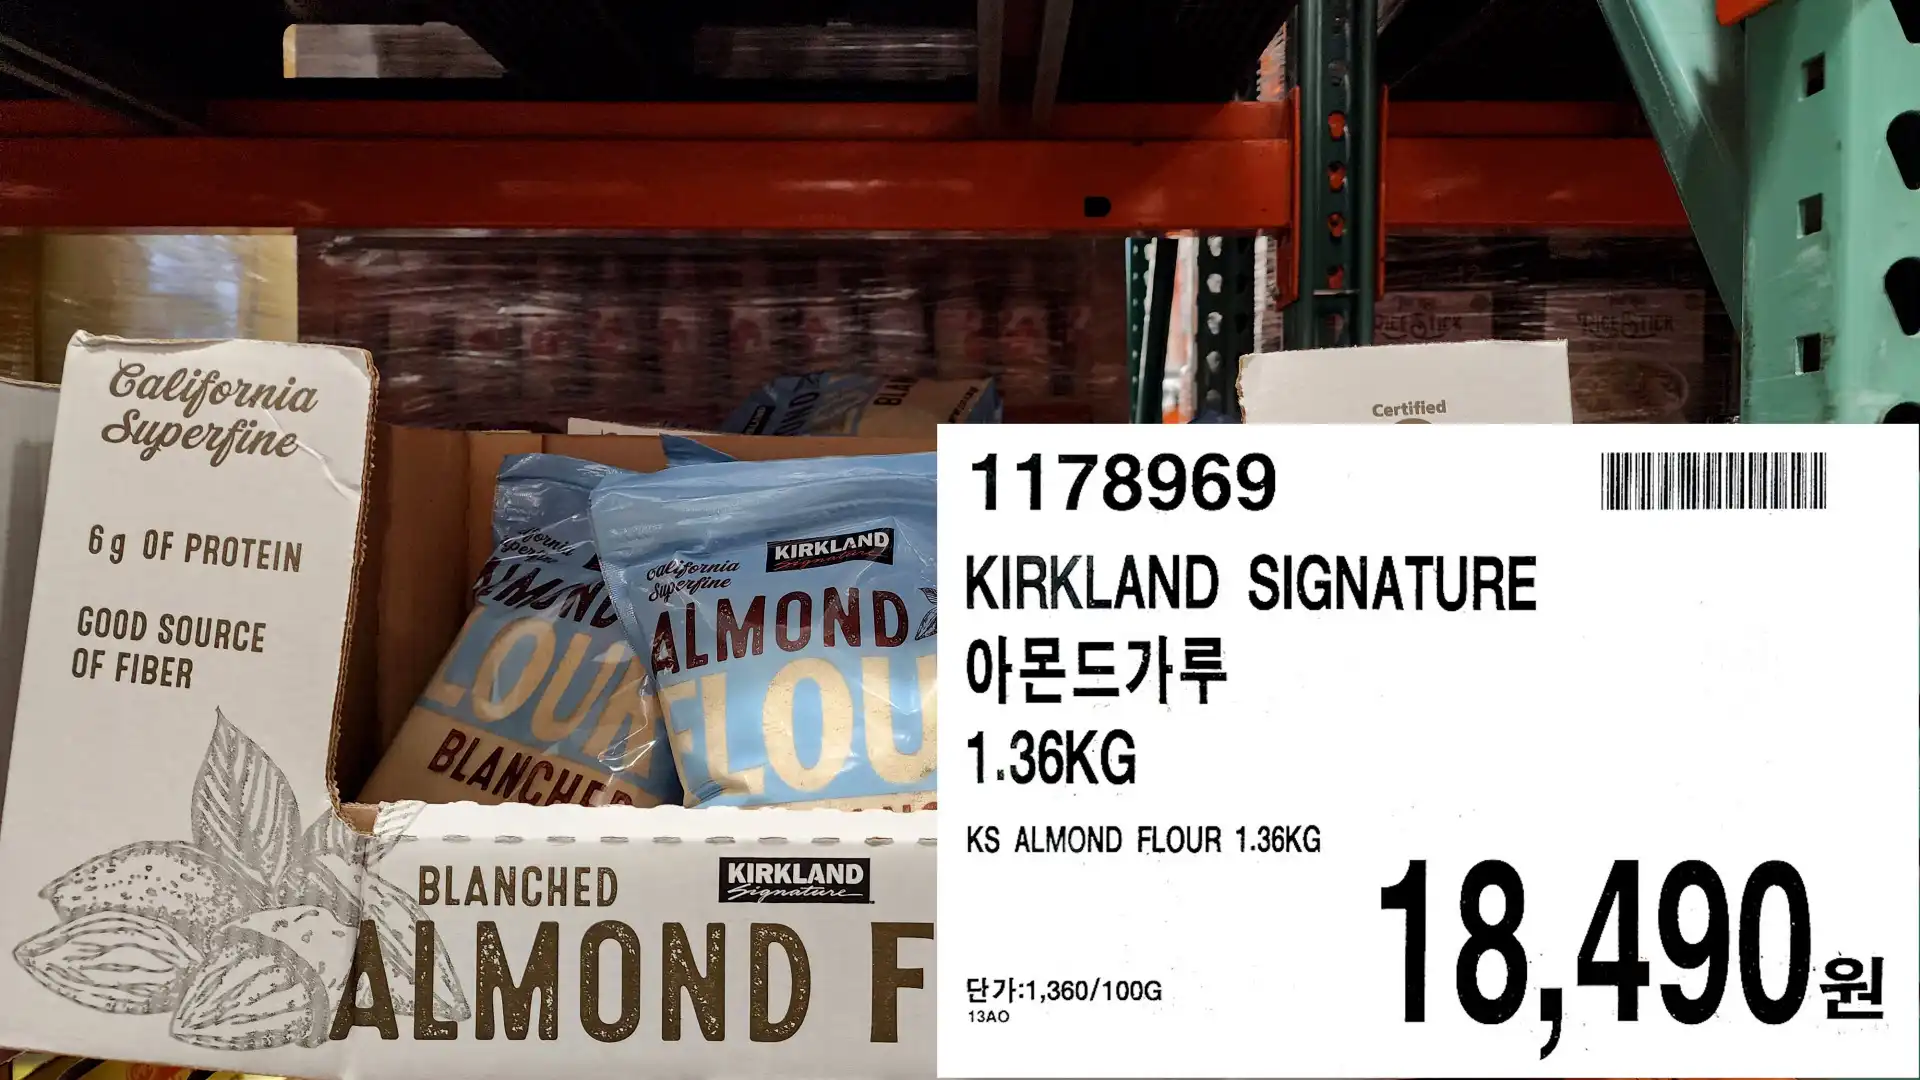 KIRKLAND SIGNATURE
아몬드가루
1.36KG
KS ALMOND FLOUR 1.36KG
단가:1,360/100G
18.490원